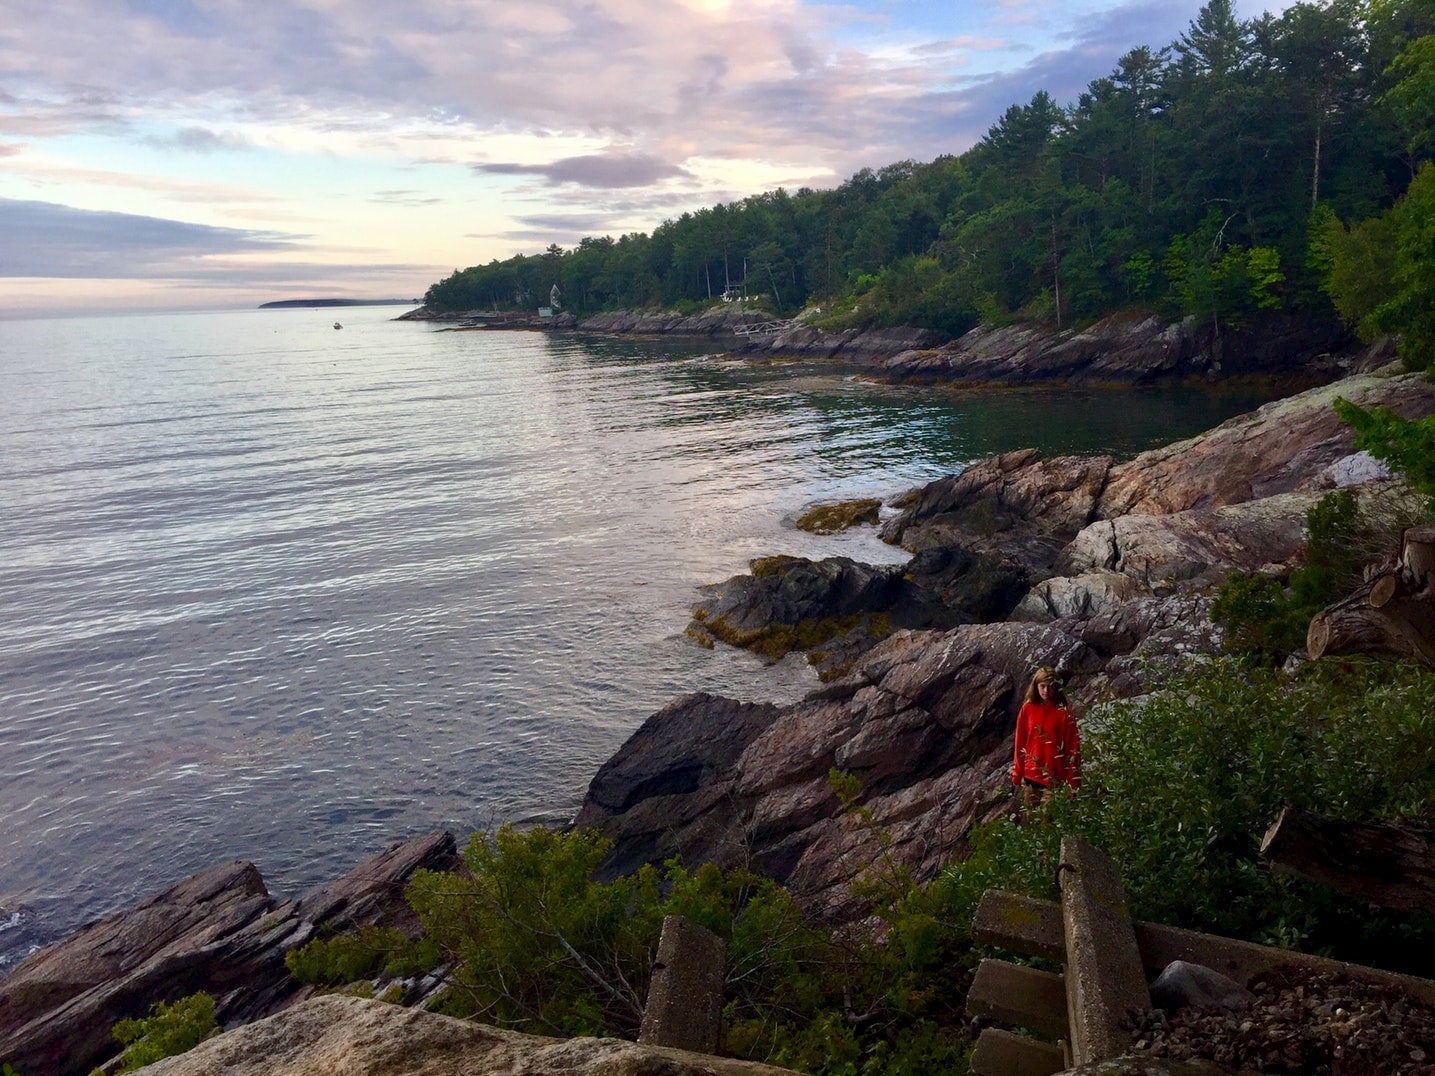 Girl in red jacket walking along coastal cliffs in Maine.